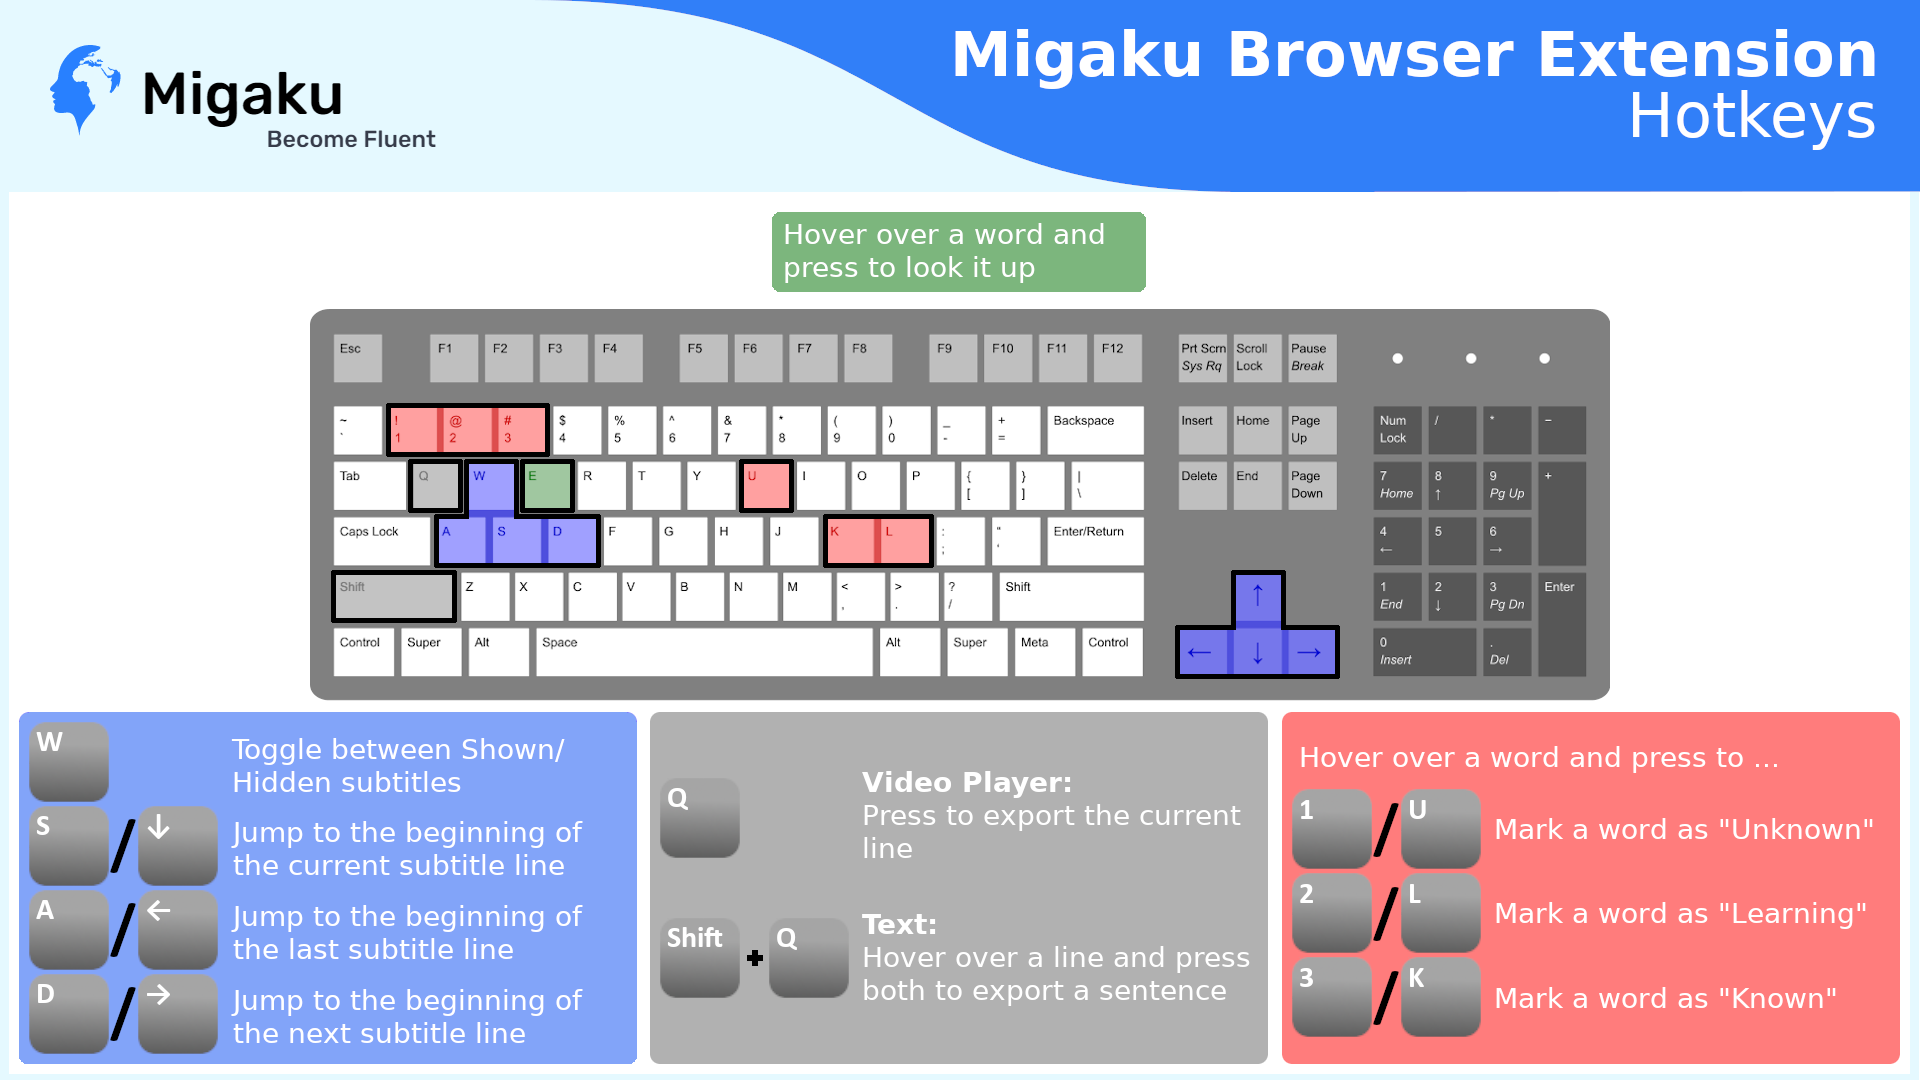 Migaku Browser Extension Hotkeys